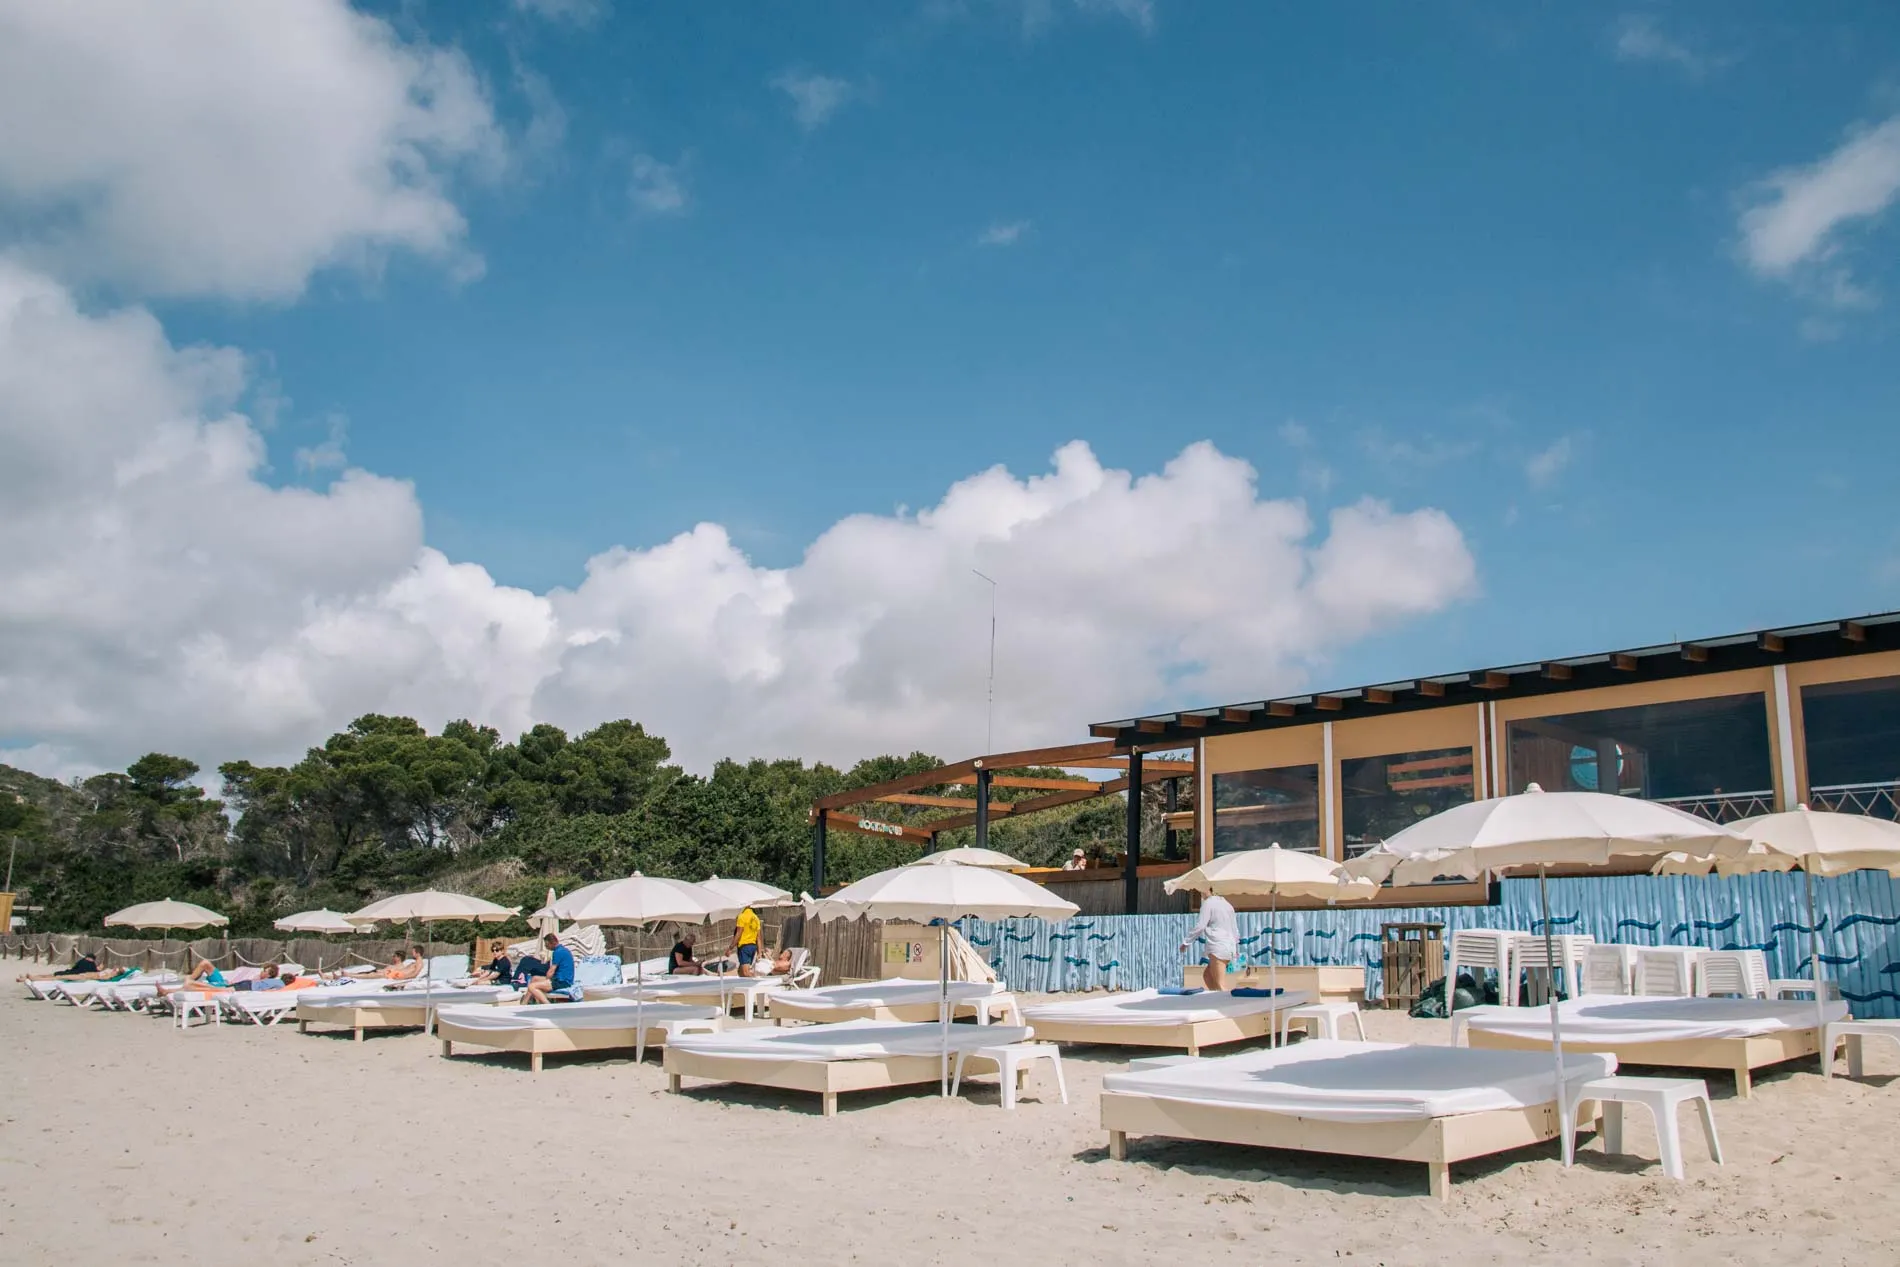 Jockey Club Ibiza in Spain, Europe | Day and Beach Clubs - Rated 4.3